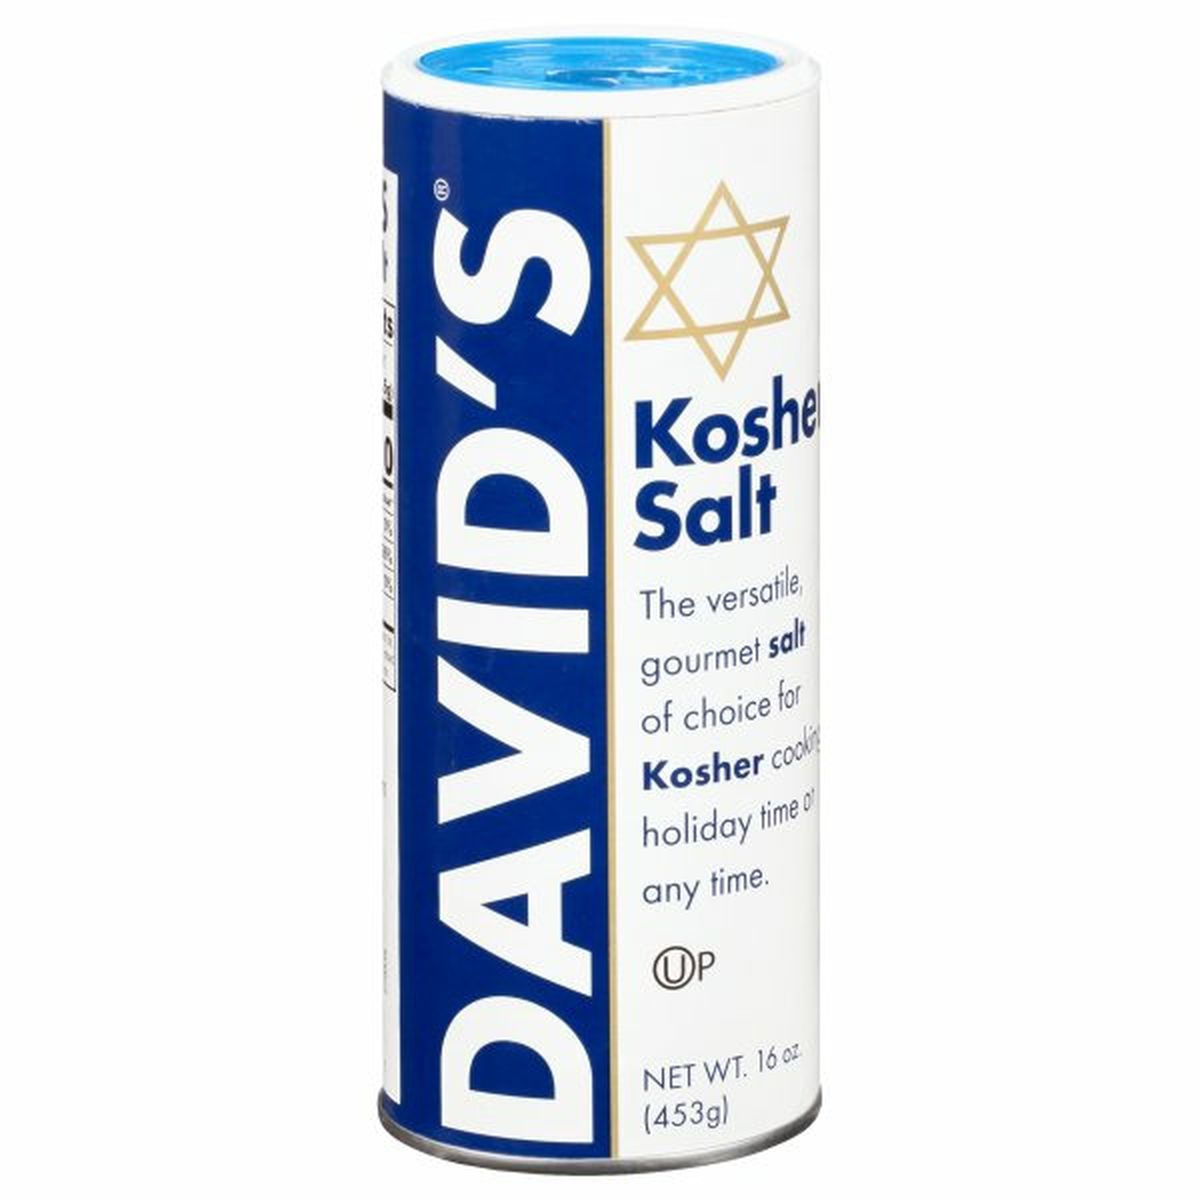 Calories in David's Kosher Salt